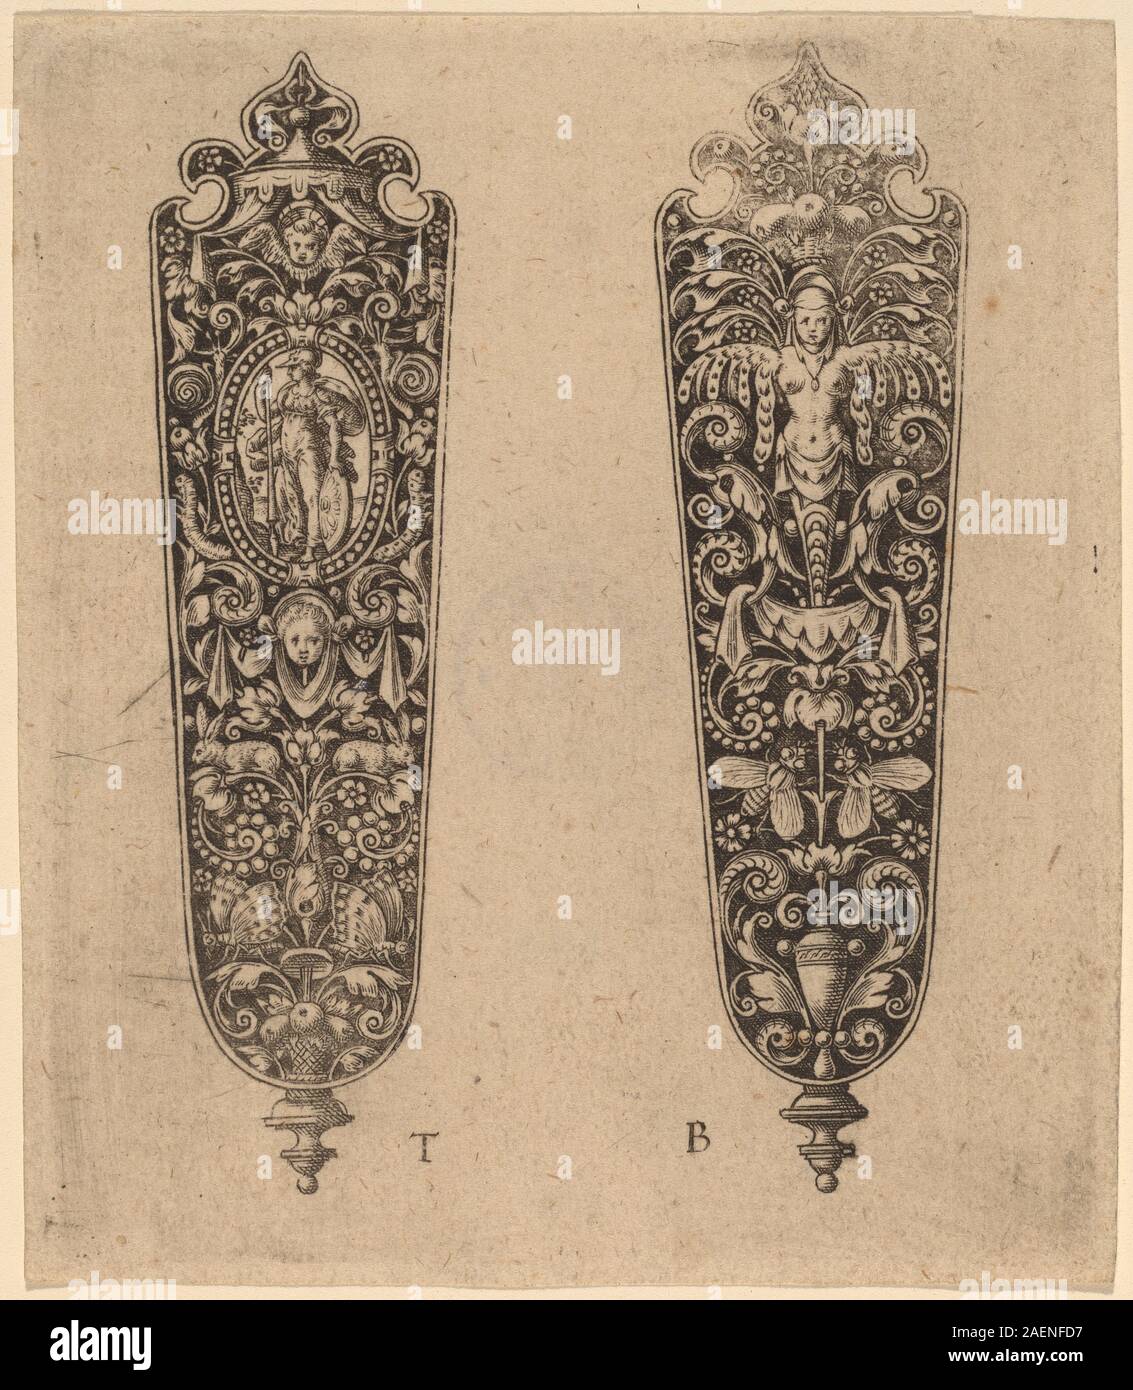 Theodor de Bry, Ornament for Knife Handle, Ornament for Knife Handle Stock Photo